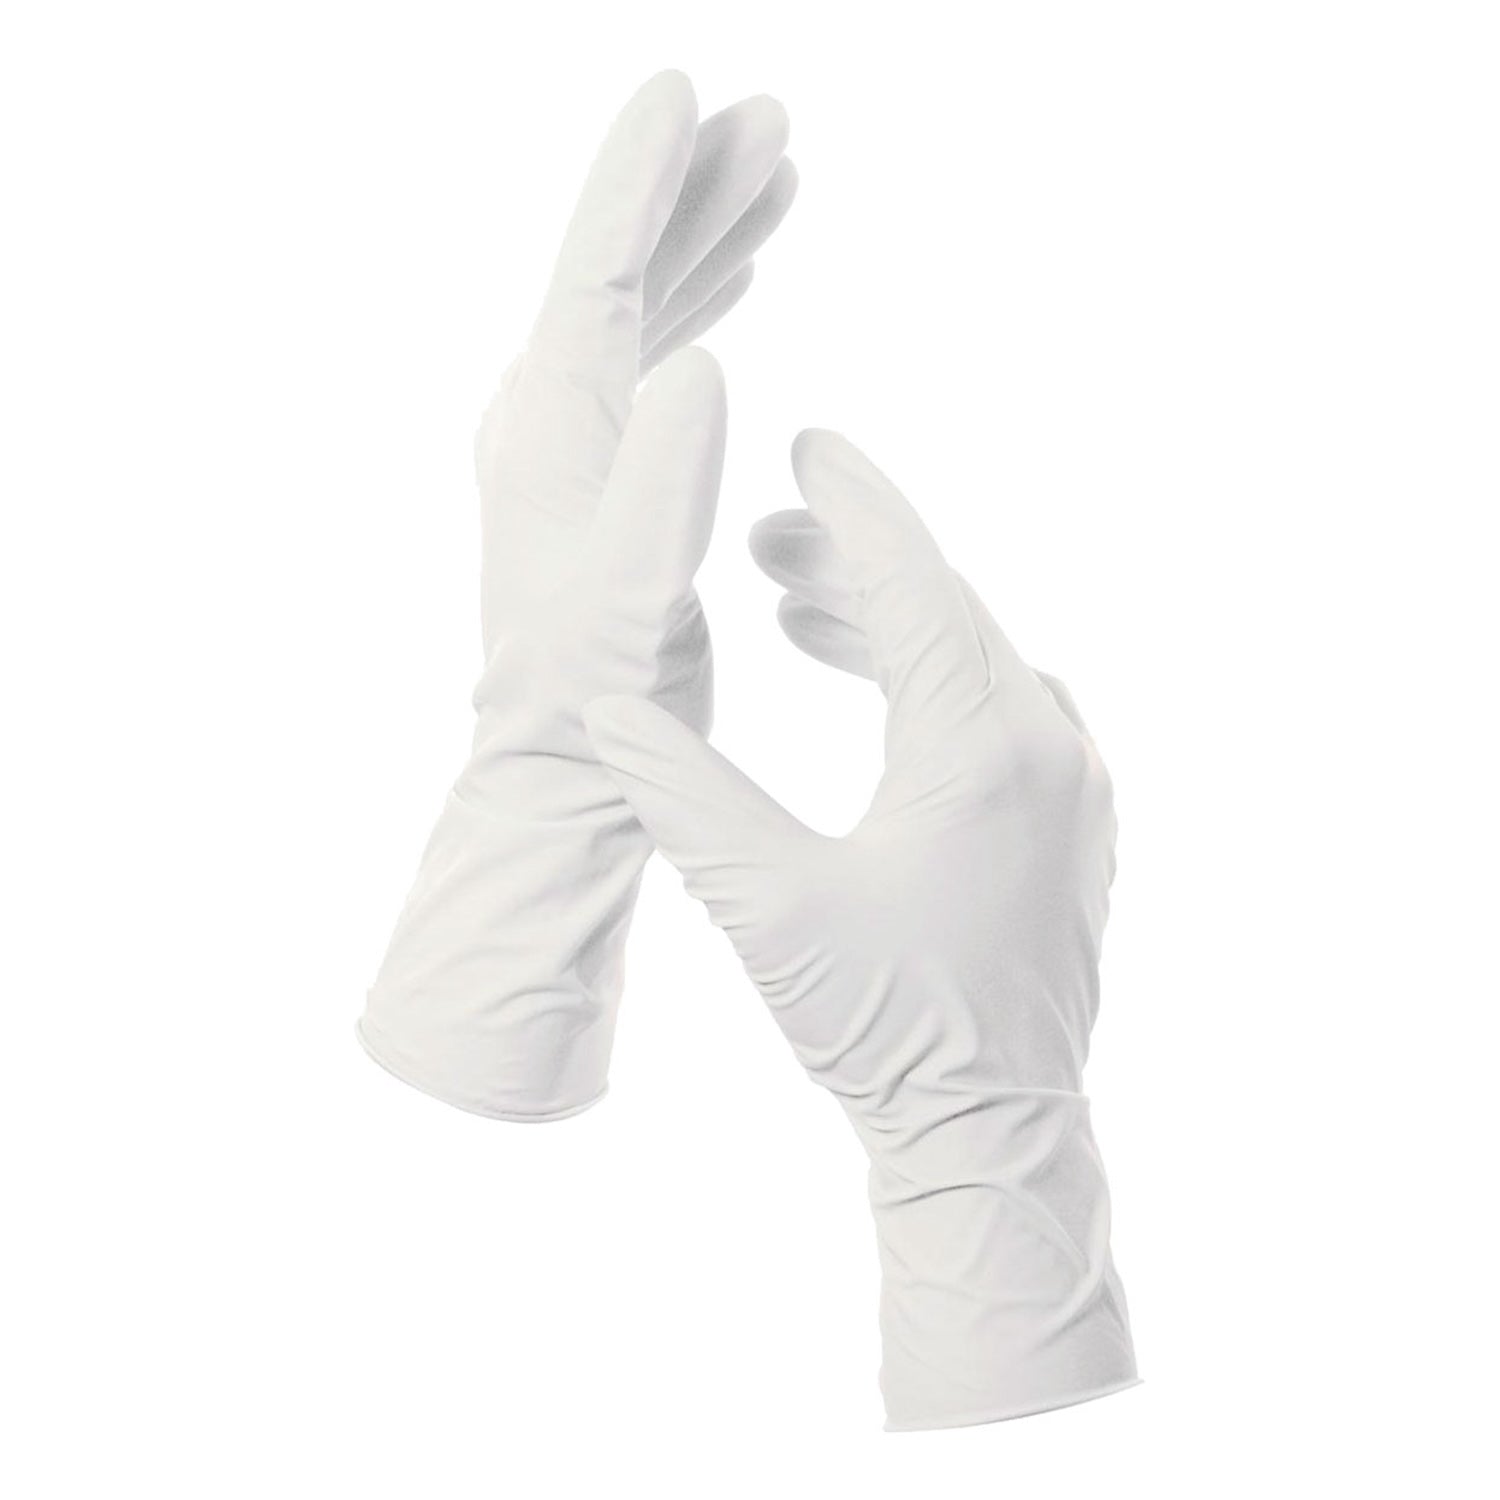 Premier Soft Vinyl Powder Free Gloves | Sterile | Latex Free | Medium | Pack of 50 Pairs (1)